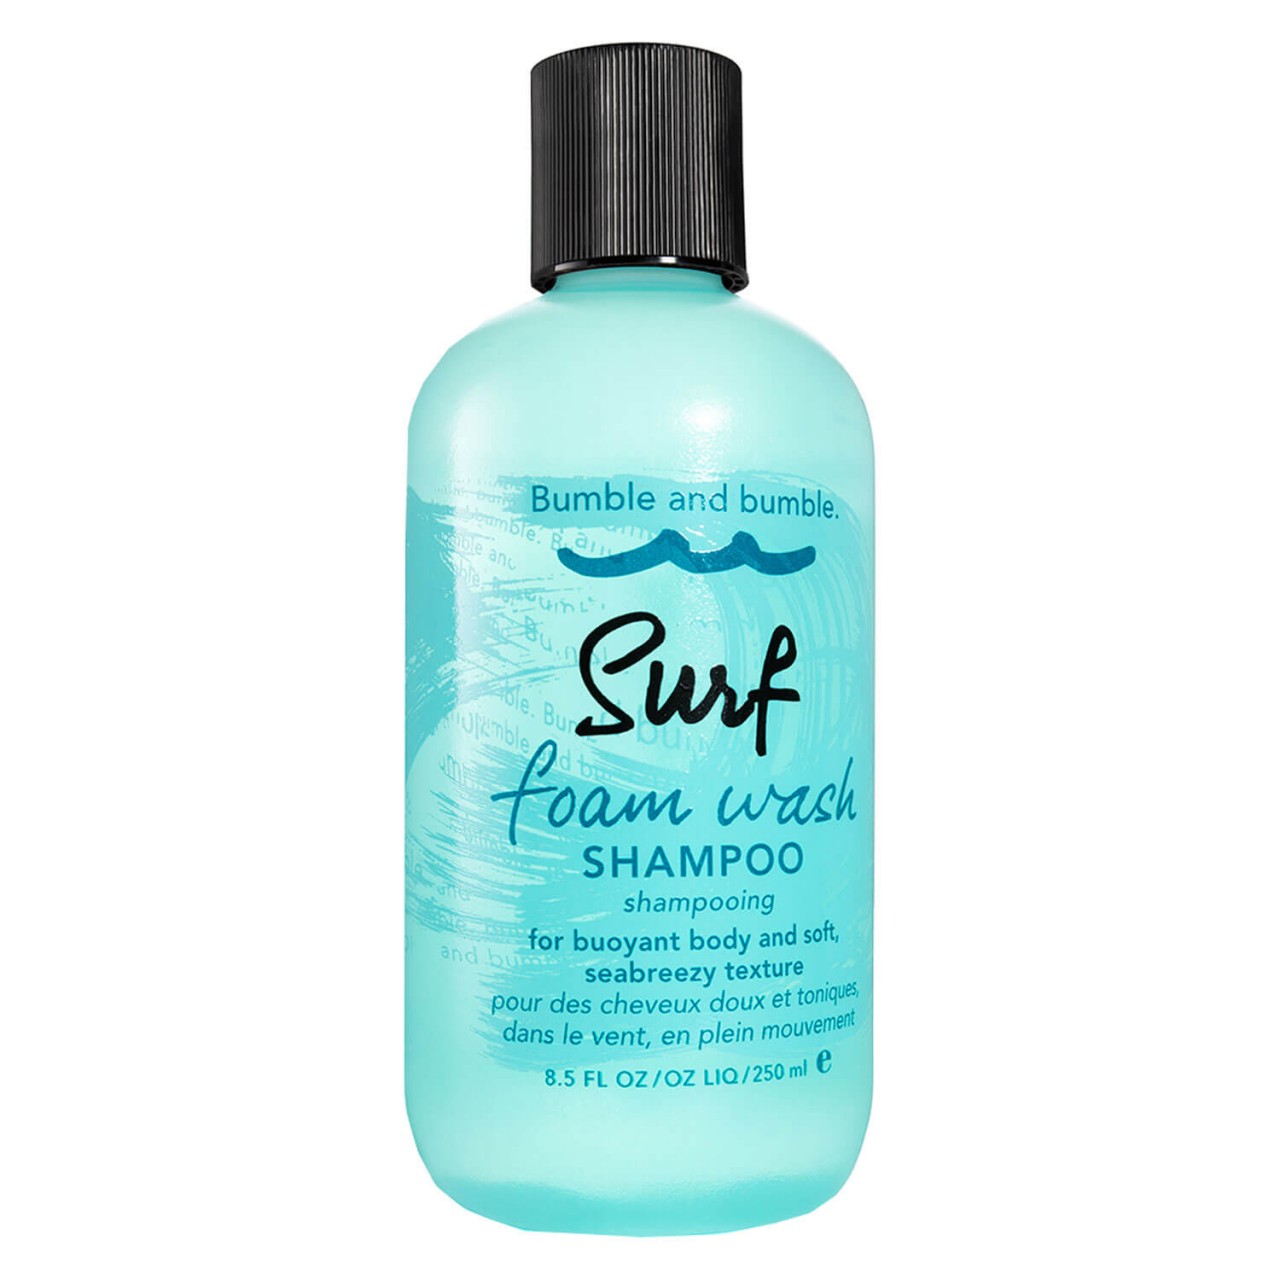 Bb. Surf - Foam Wash Shampoo von Bumble and bumble.